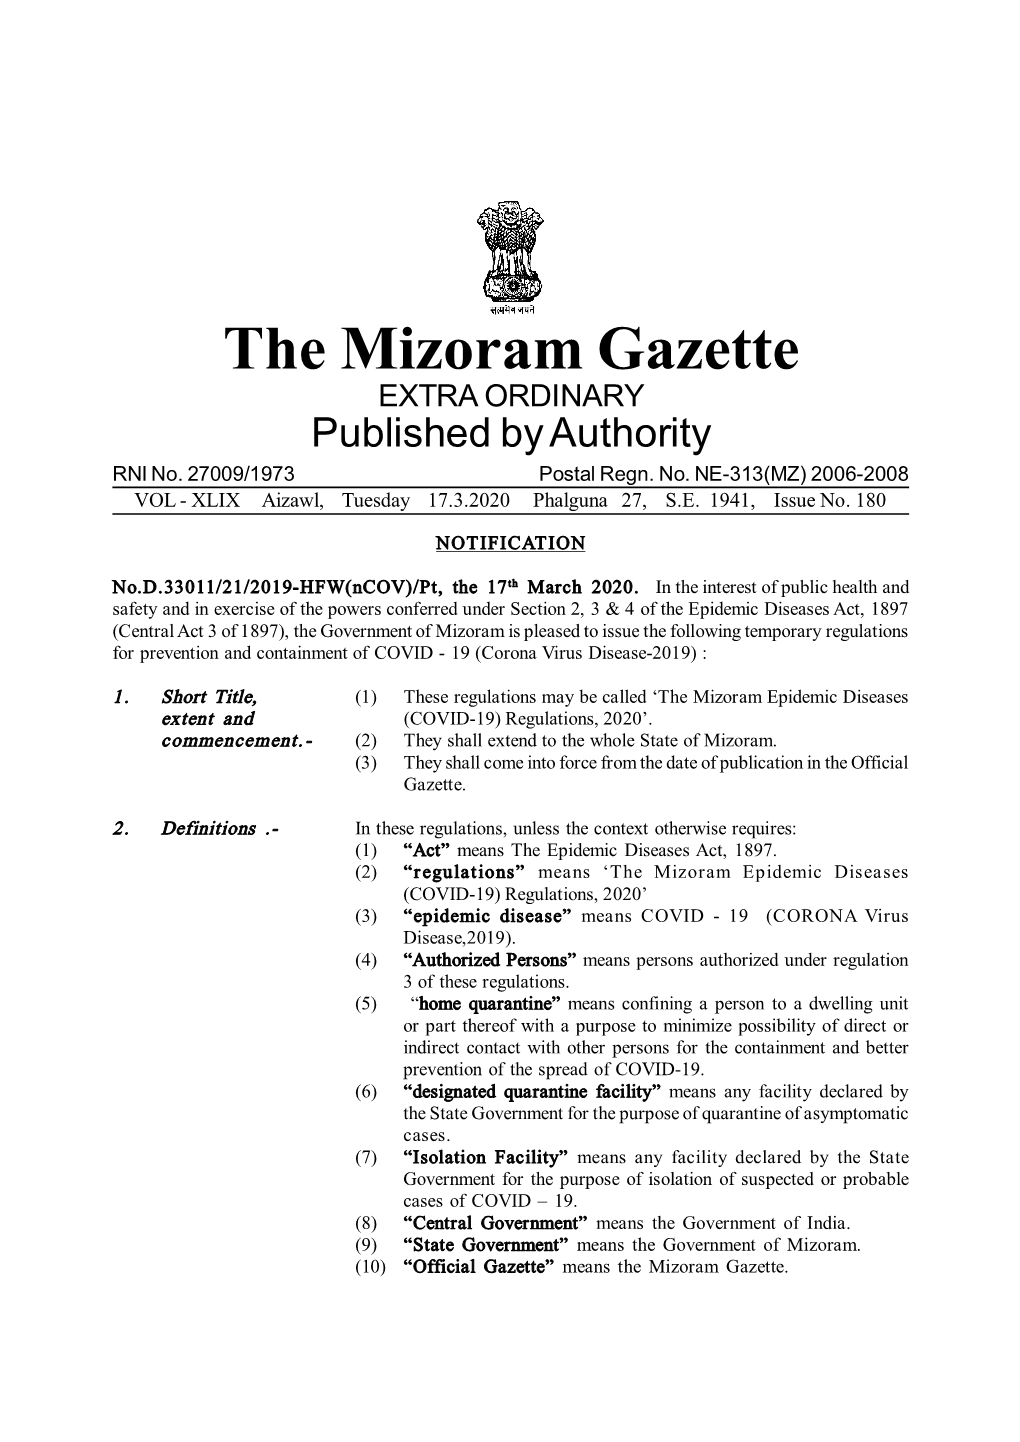 Mizoram Epidemic Diseases (COVID-19) Regulation 2020